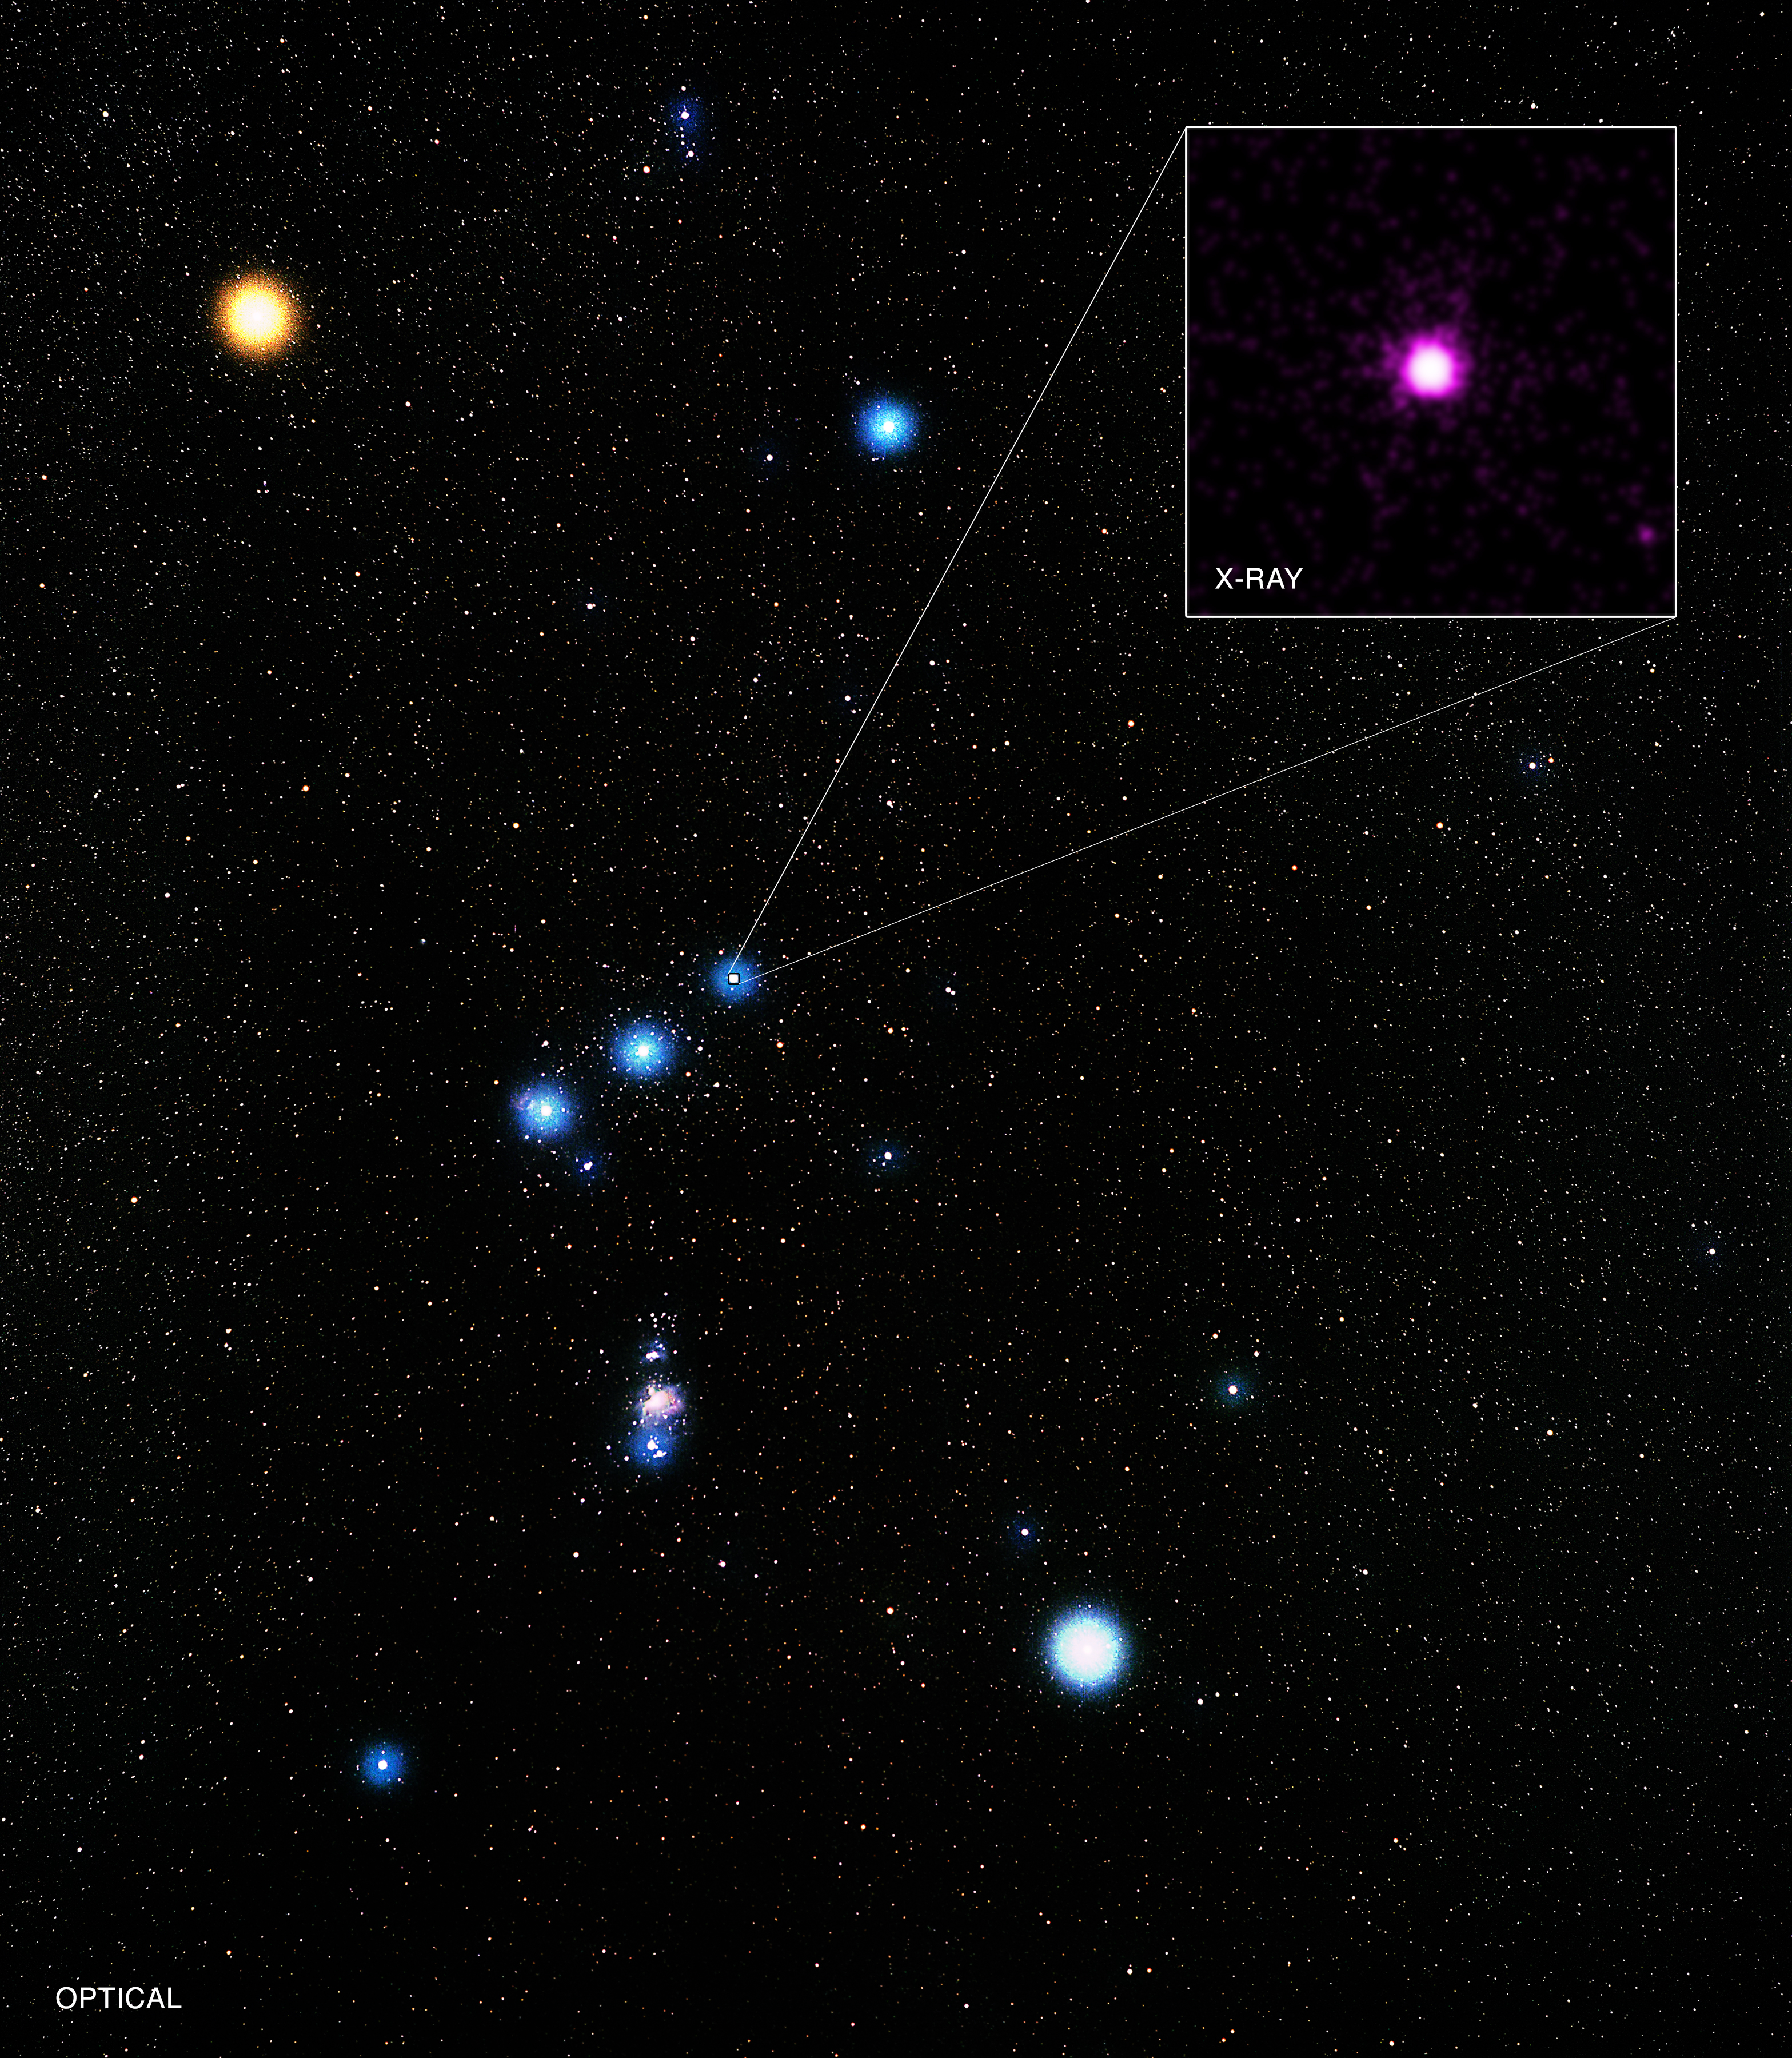 Orion's Belt, 3 Bright Stars in Orion